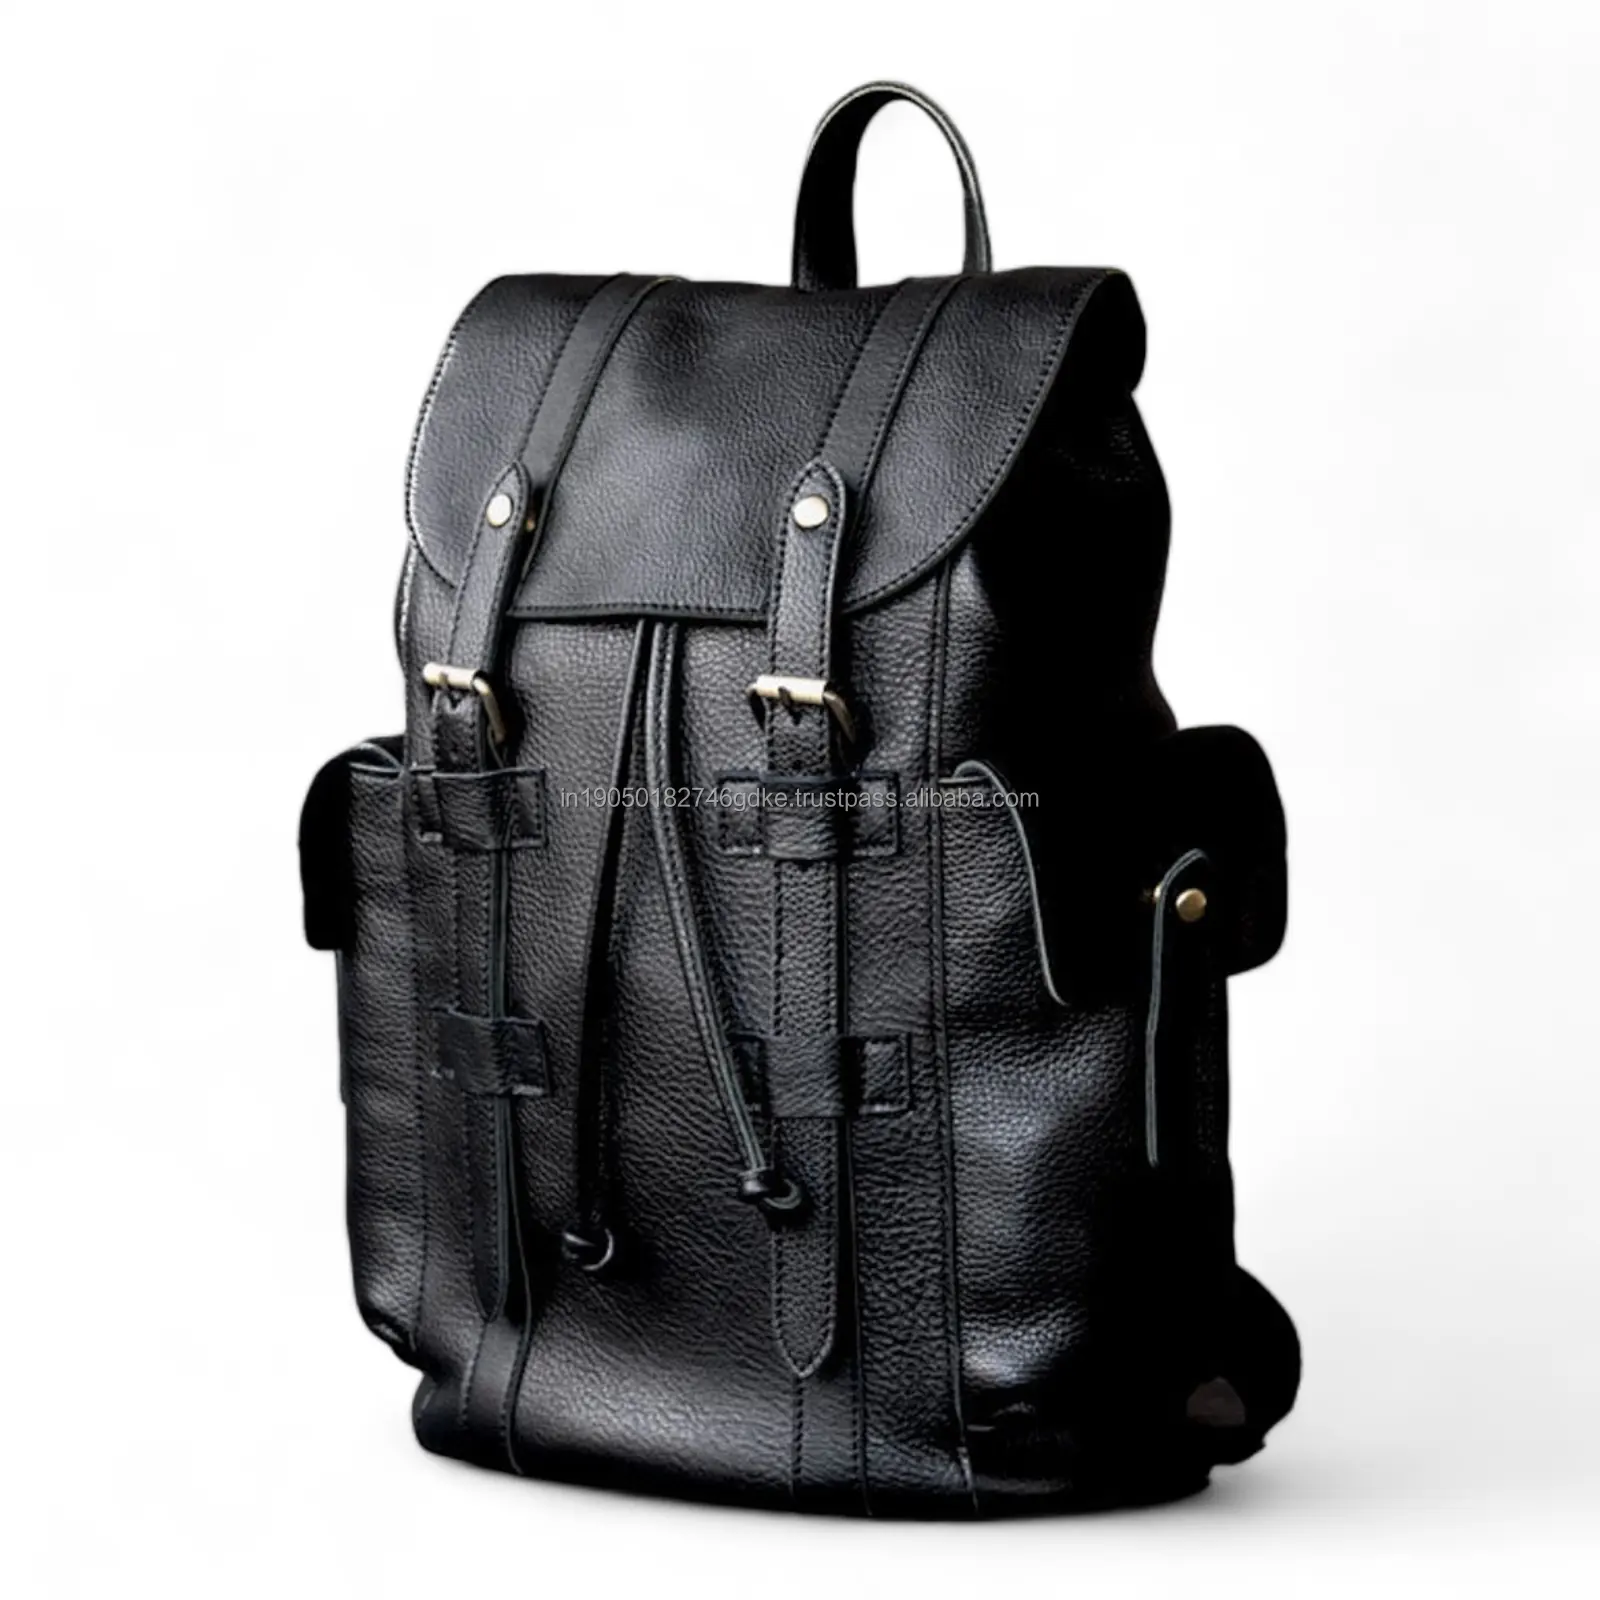 ALBORZ 정품 가죽 블랙 백팩 가방 학교 및 대학 하룻밤 여행 캠핑 빈티지 디자인 인기있는 배낭 가방